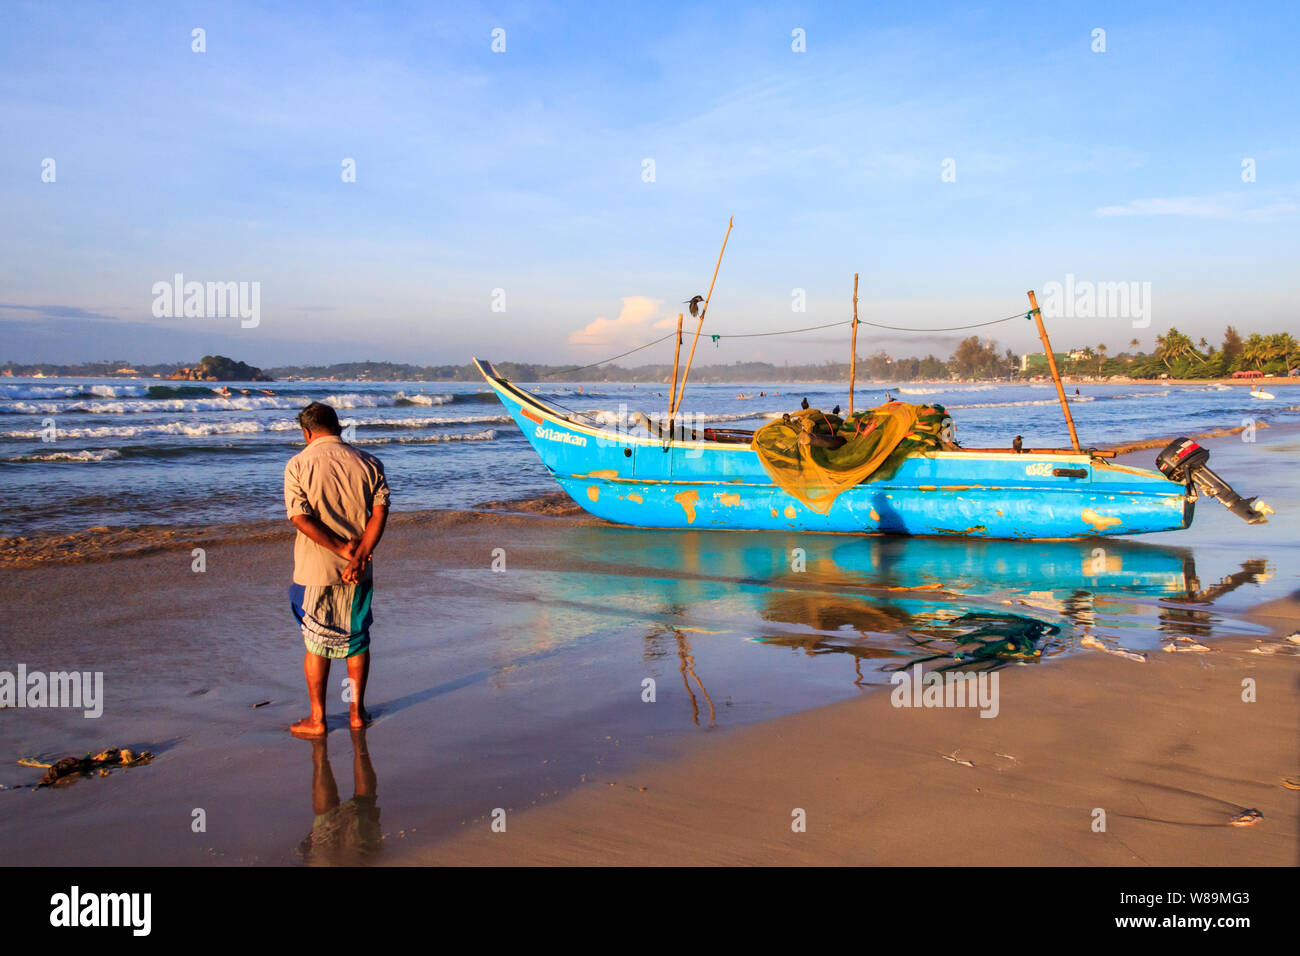 Mirissa, Sri Lanka - Decmber 30th 2016: Man stood by a traditional fishing boat ashore. The boats return early morning after a nights fishing. Stock Photo